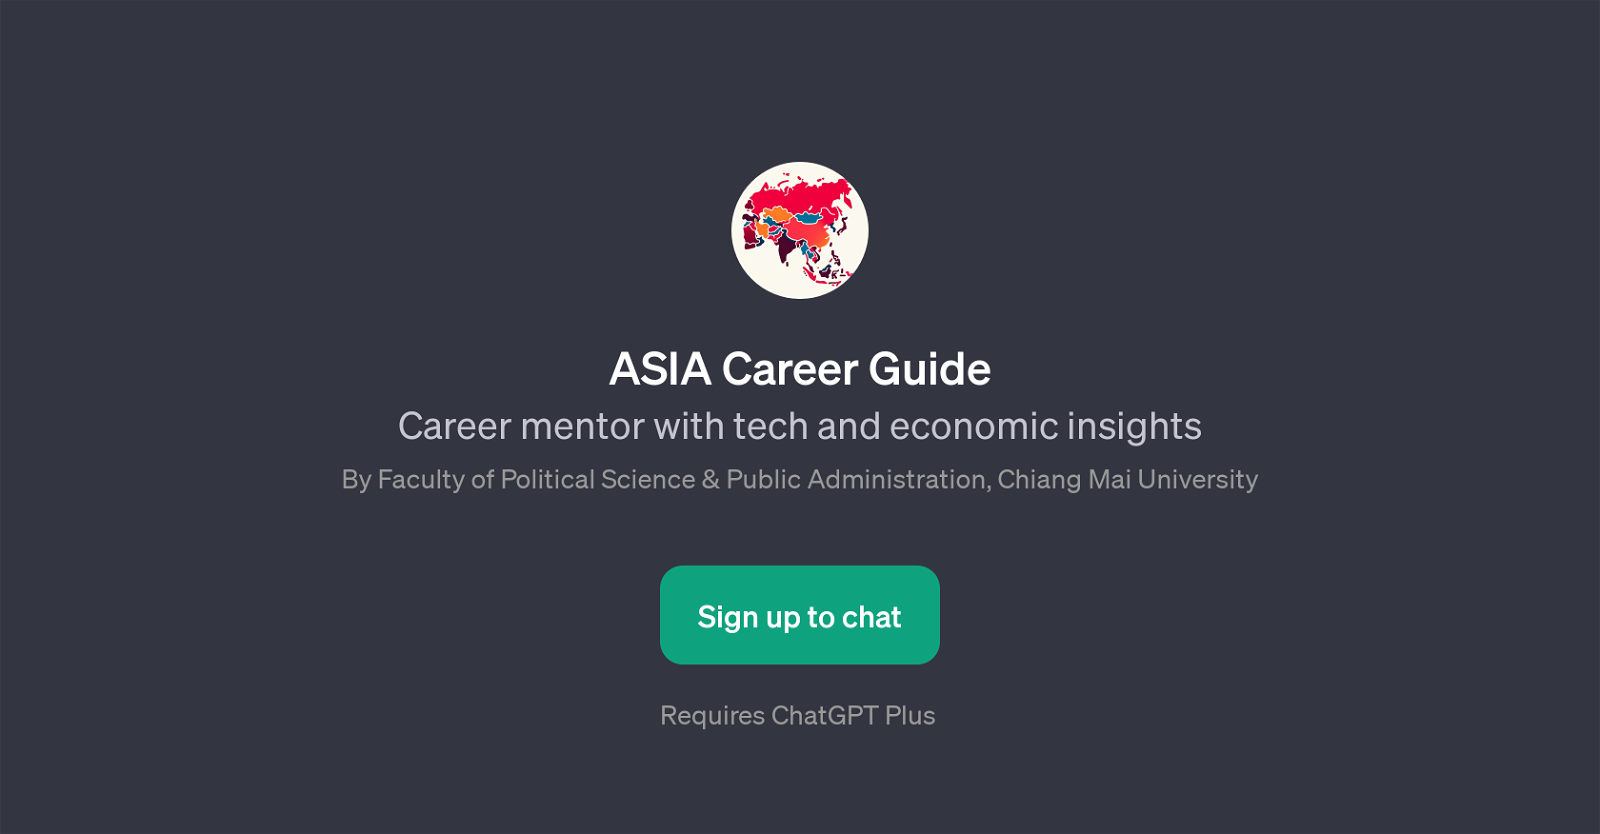 ASIA Career Guide website